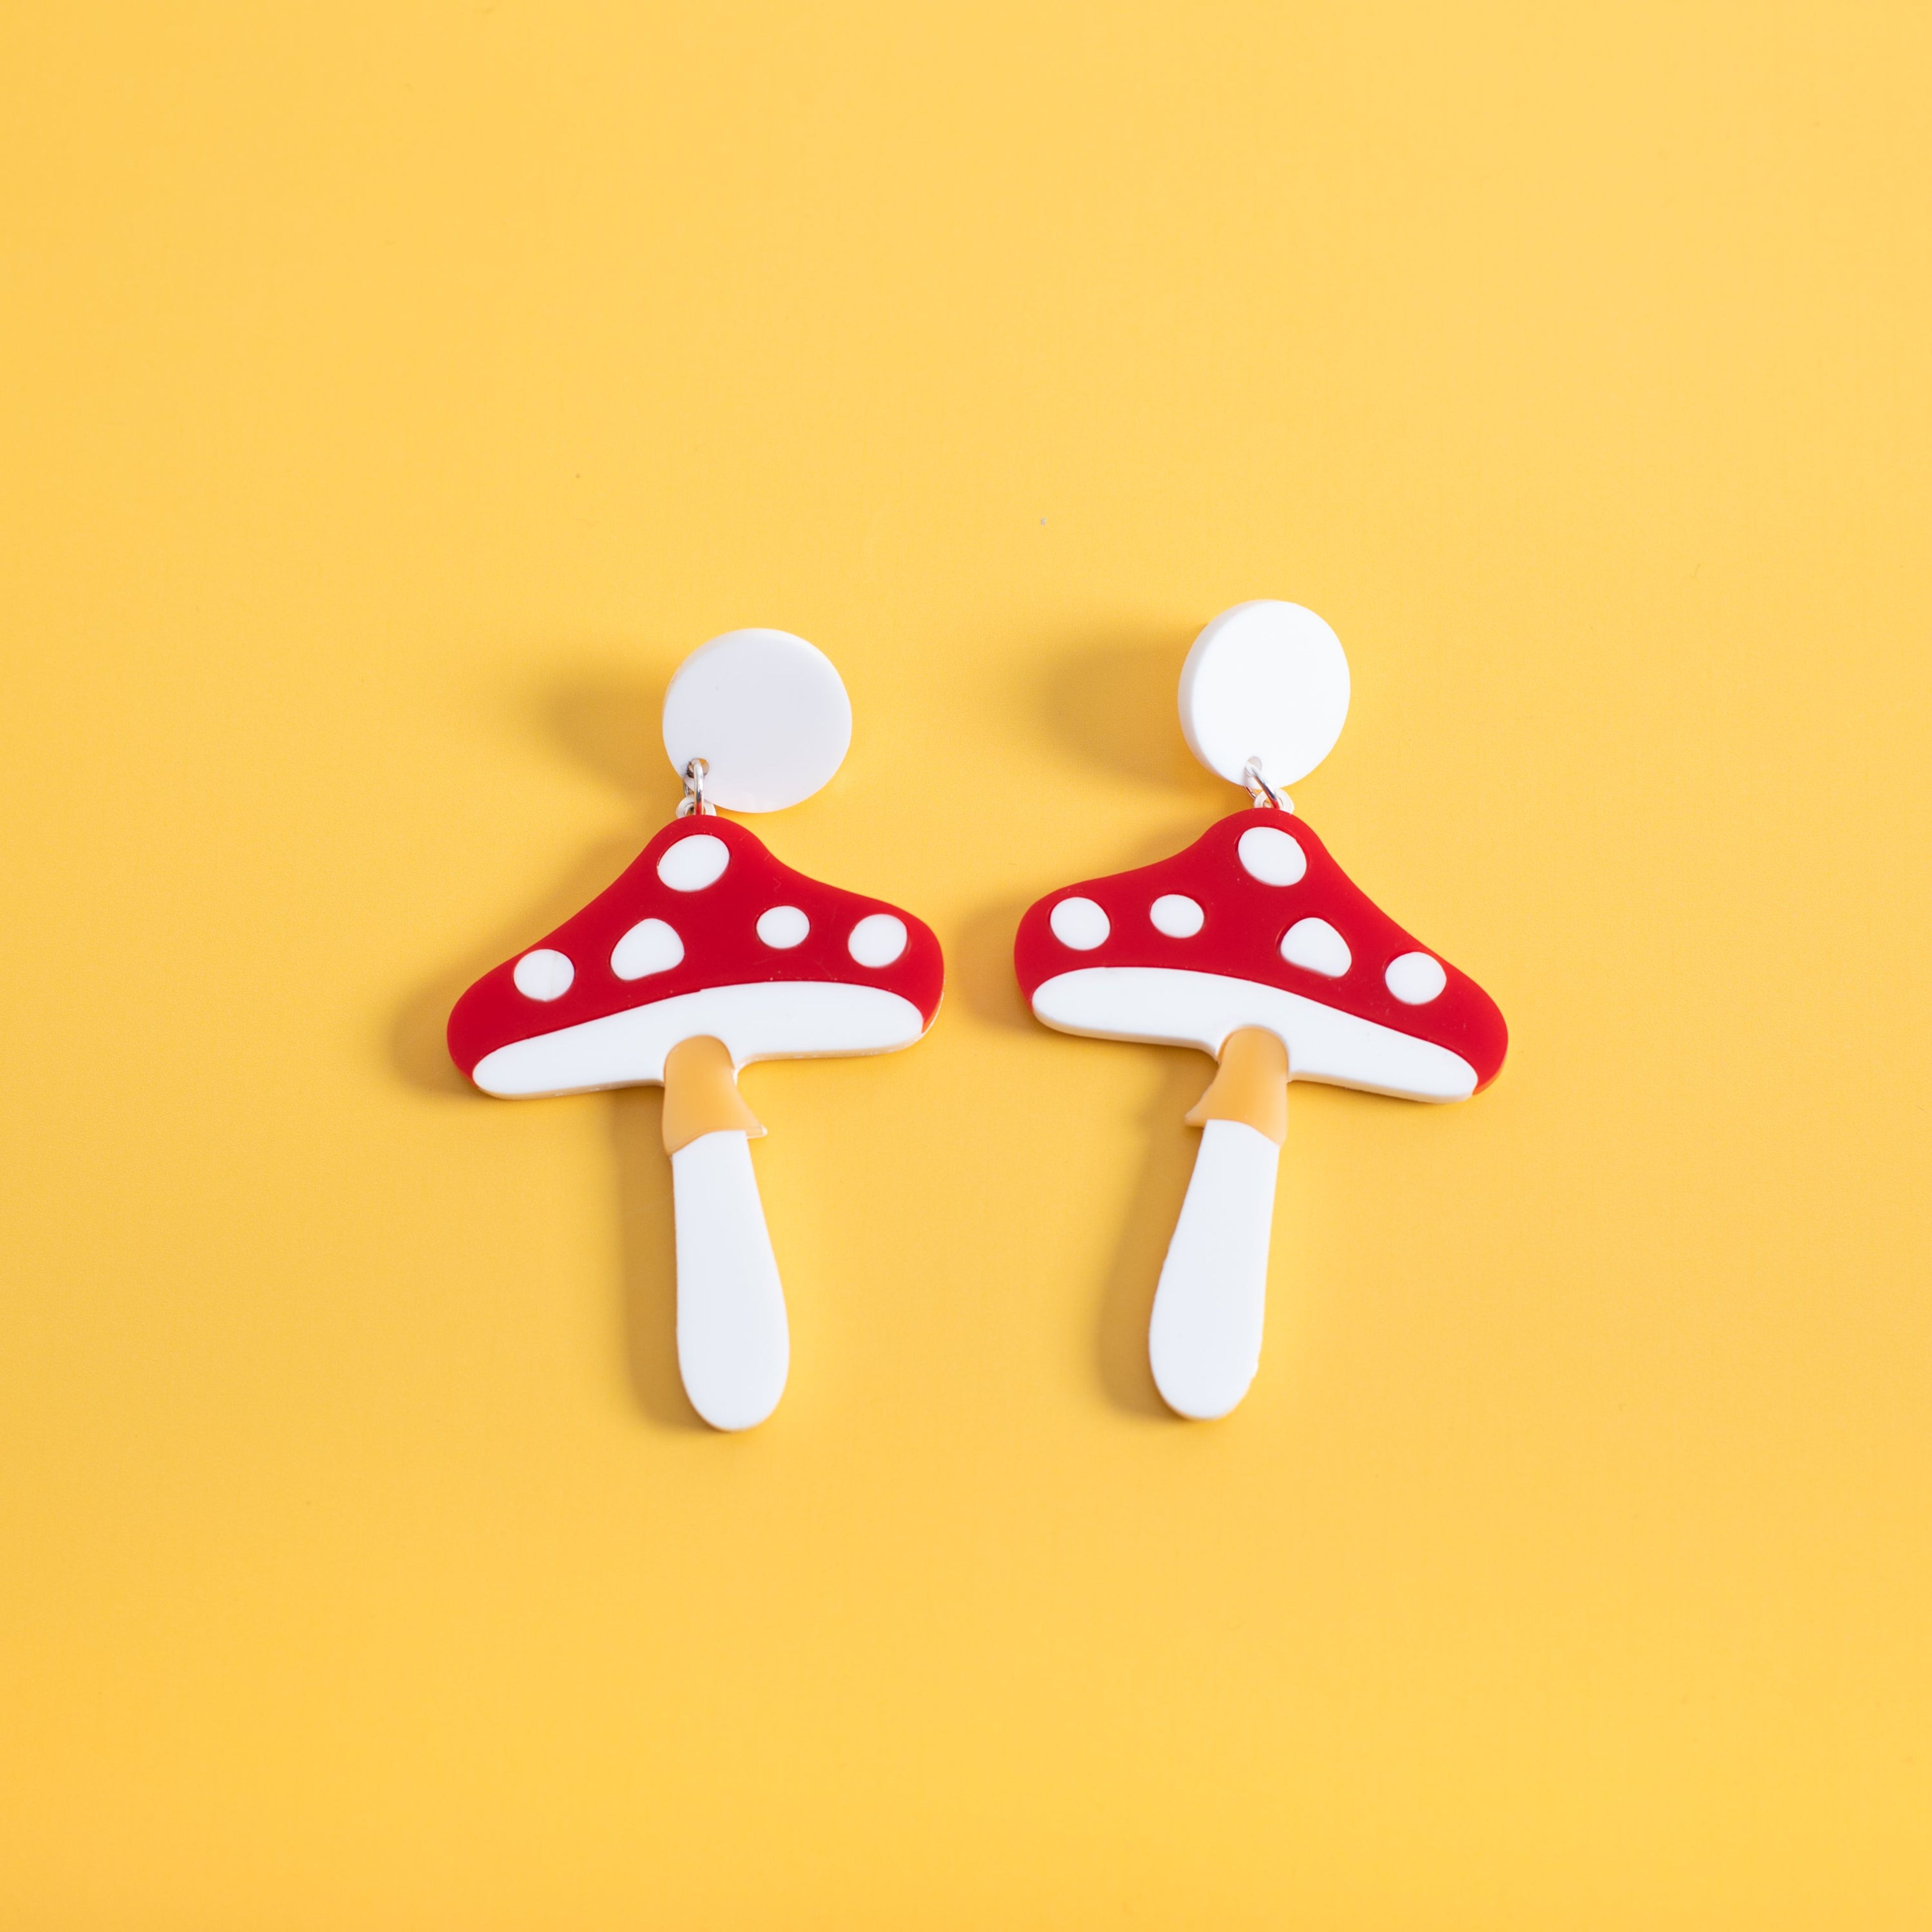 The Magic Mushroom Stud Earrings